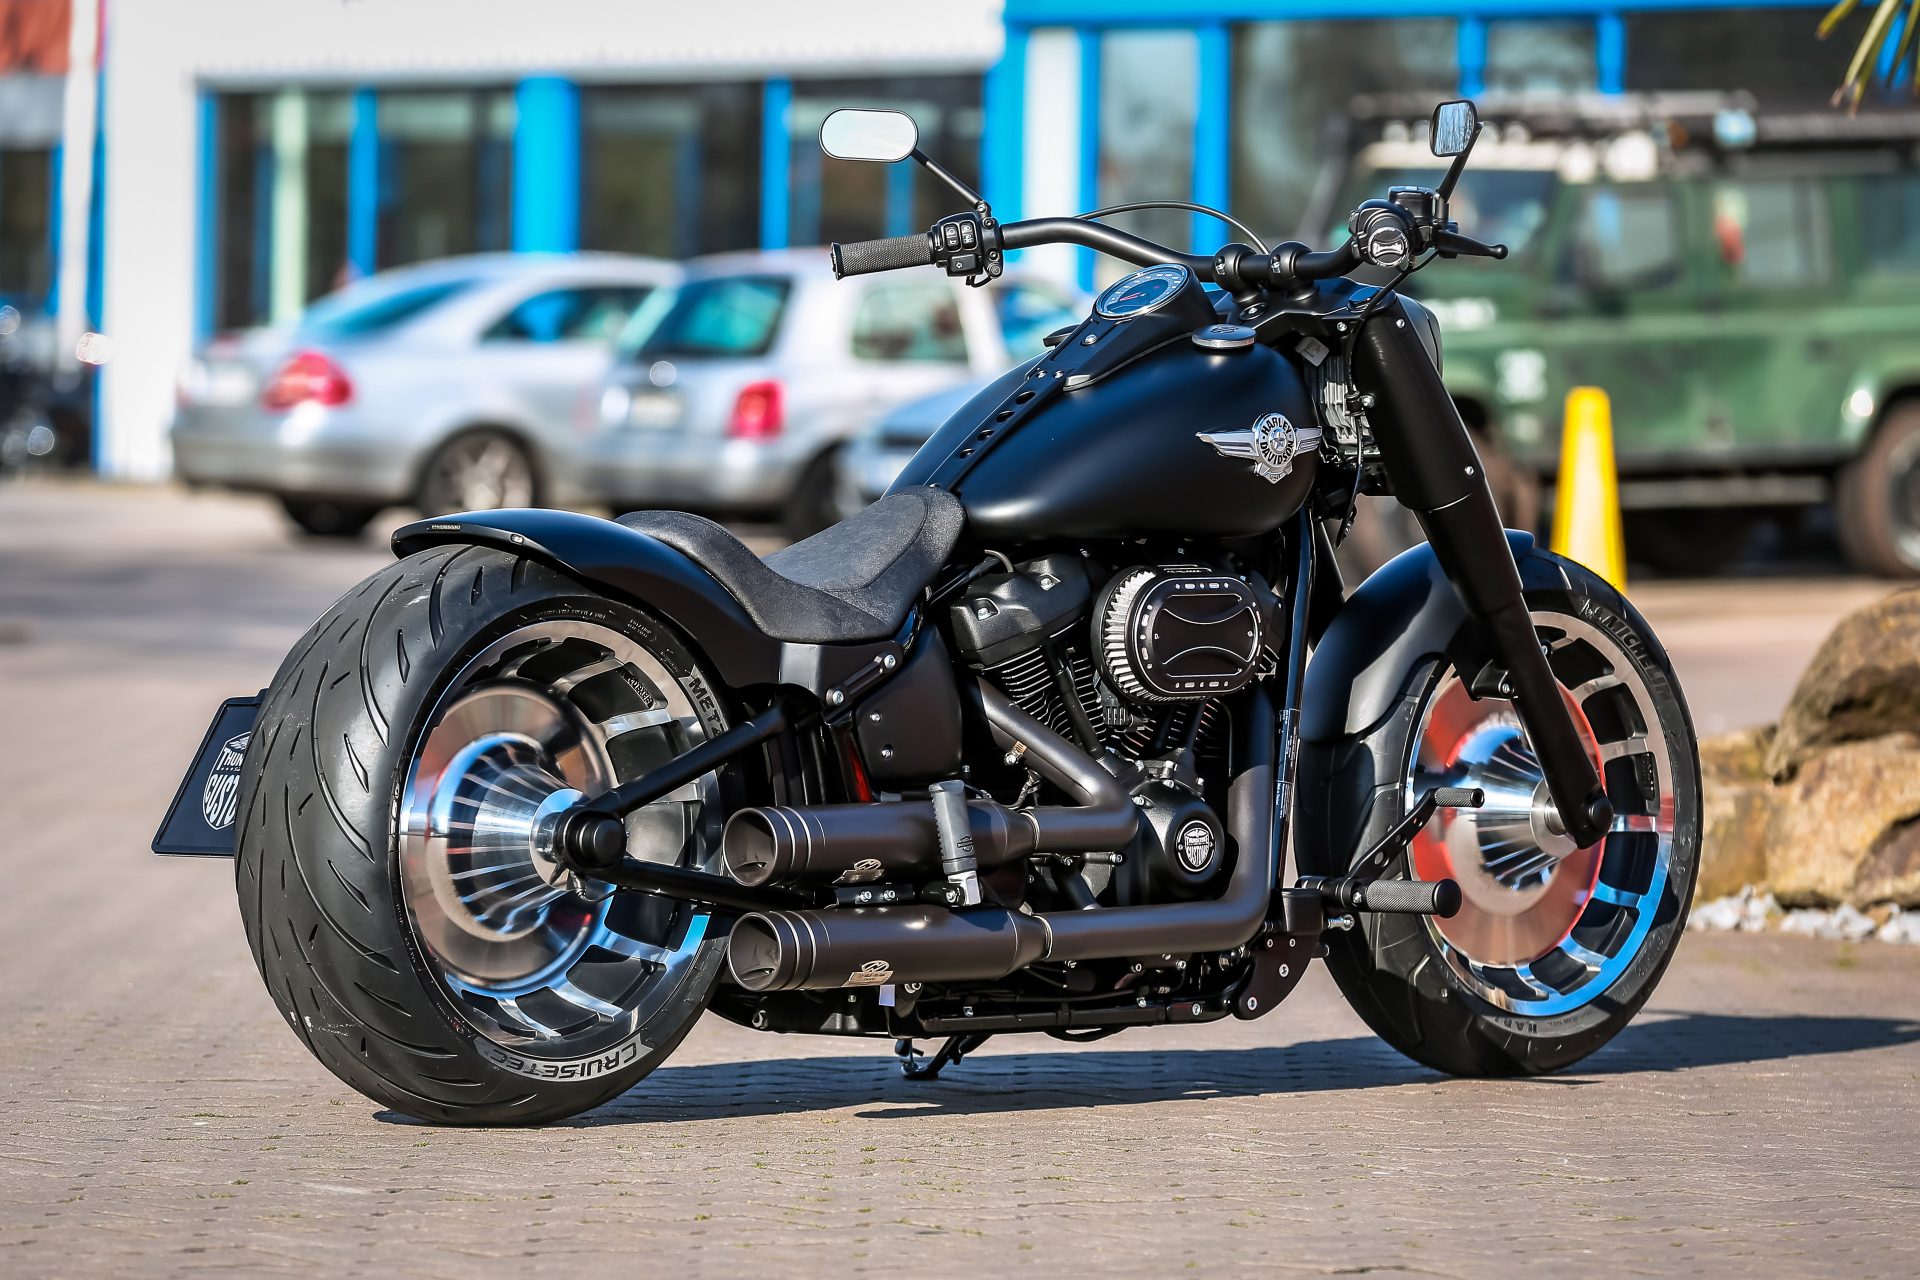 Harley Davidson Fatboy Black Edition Online